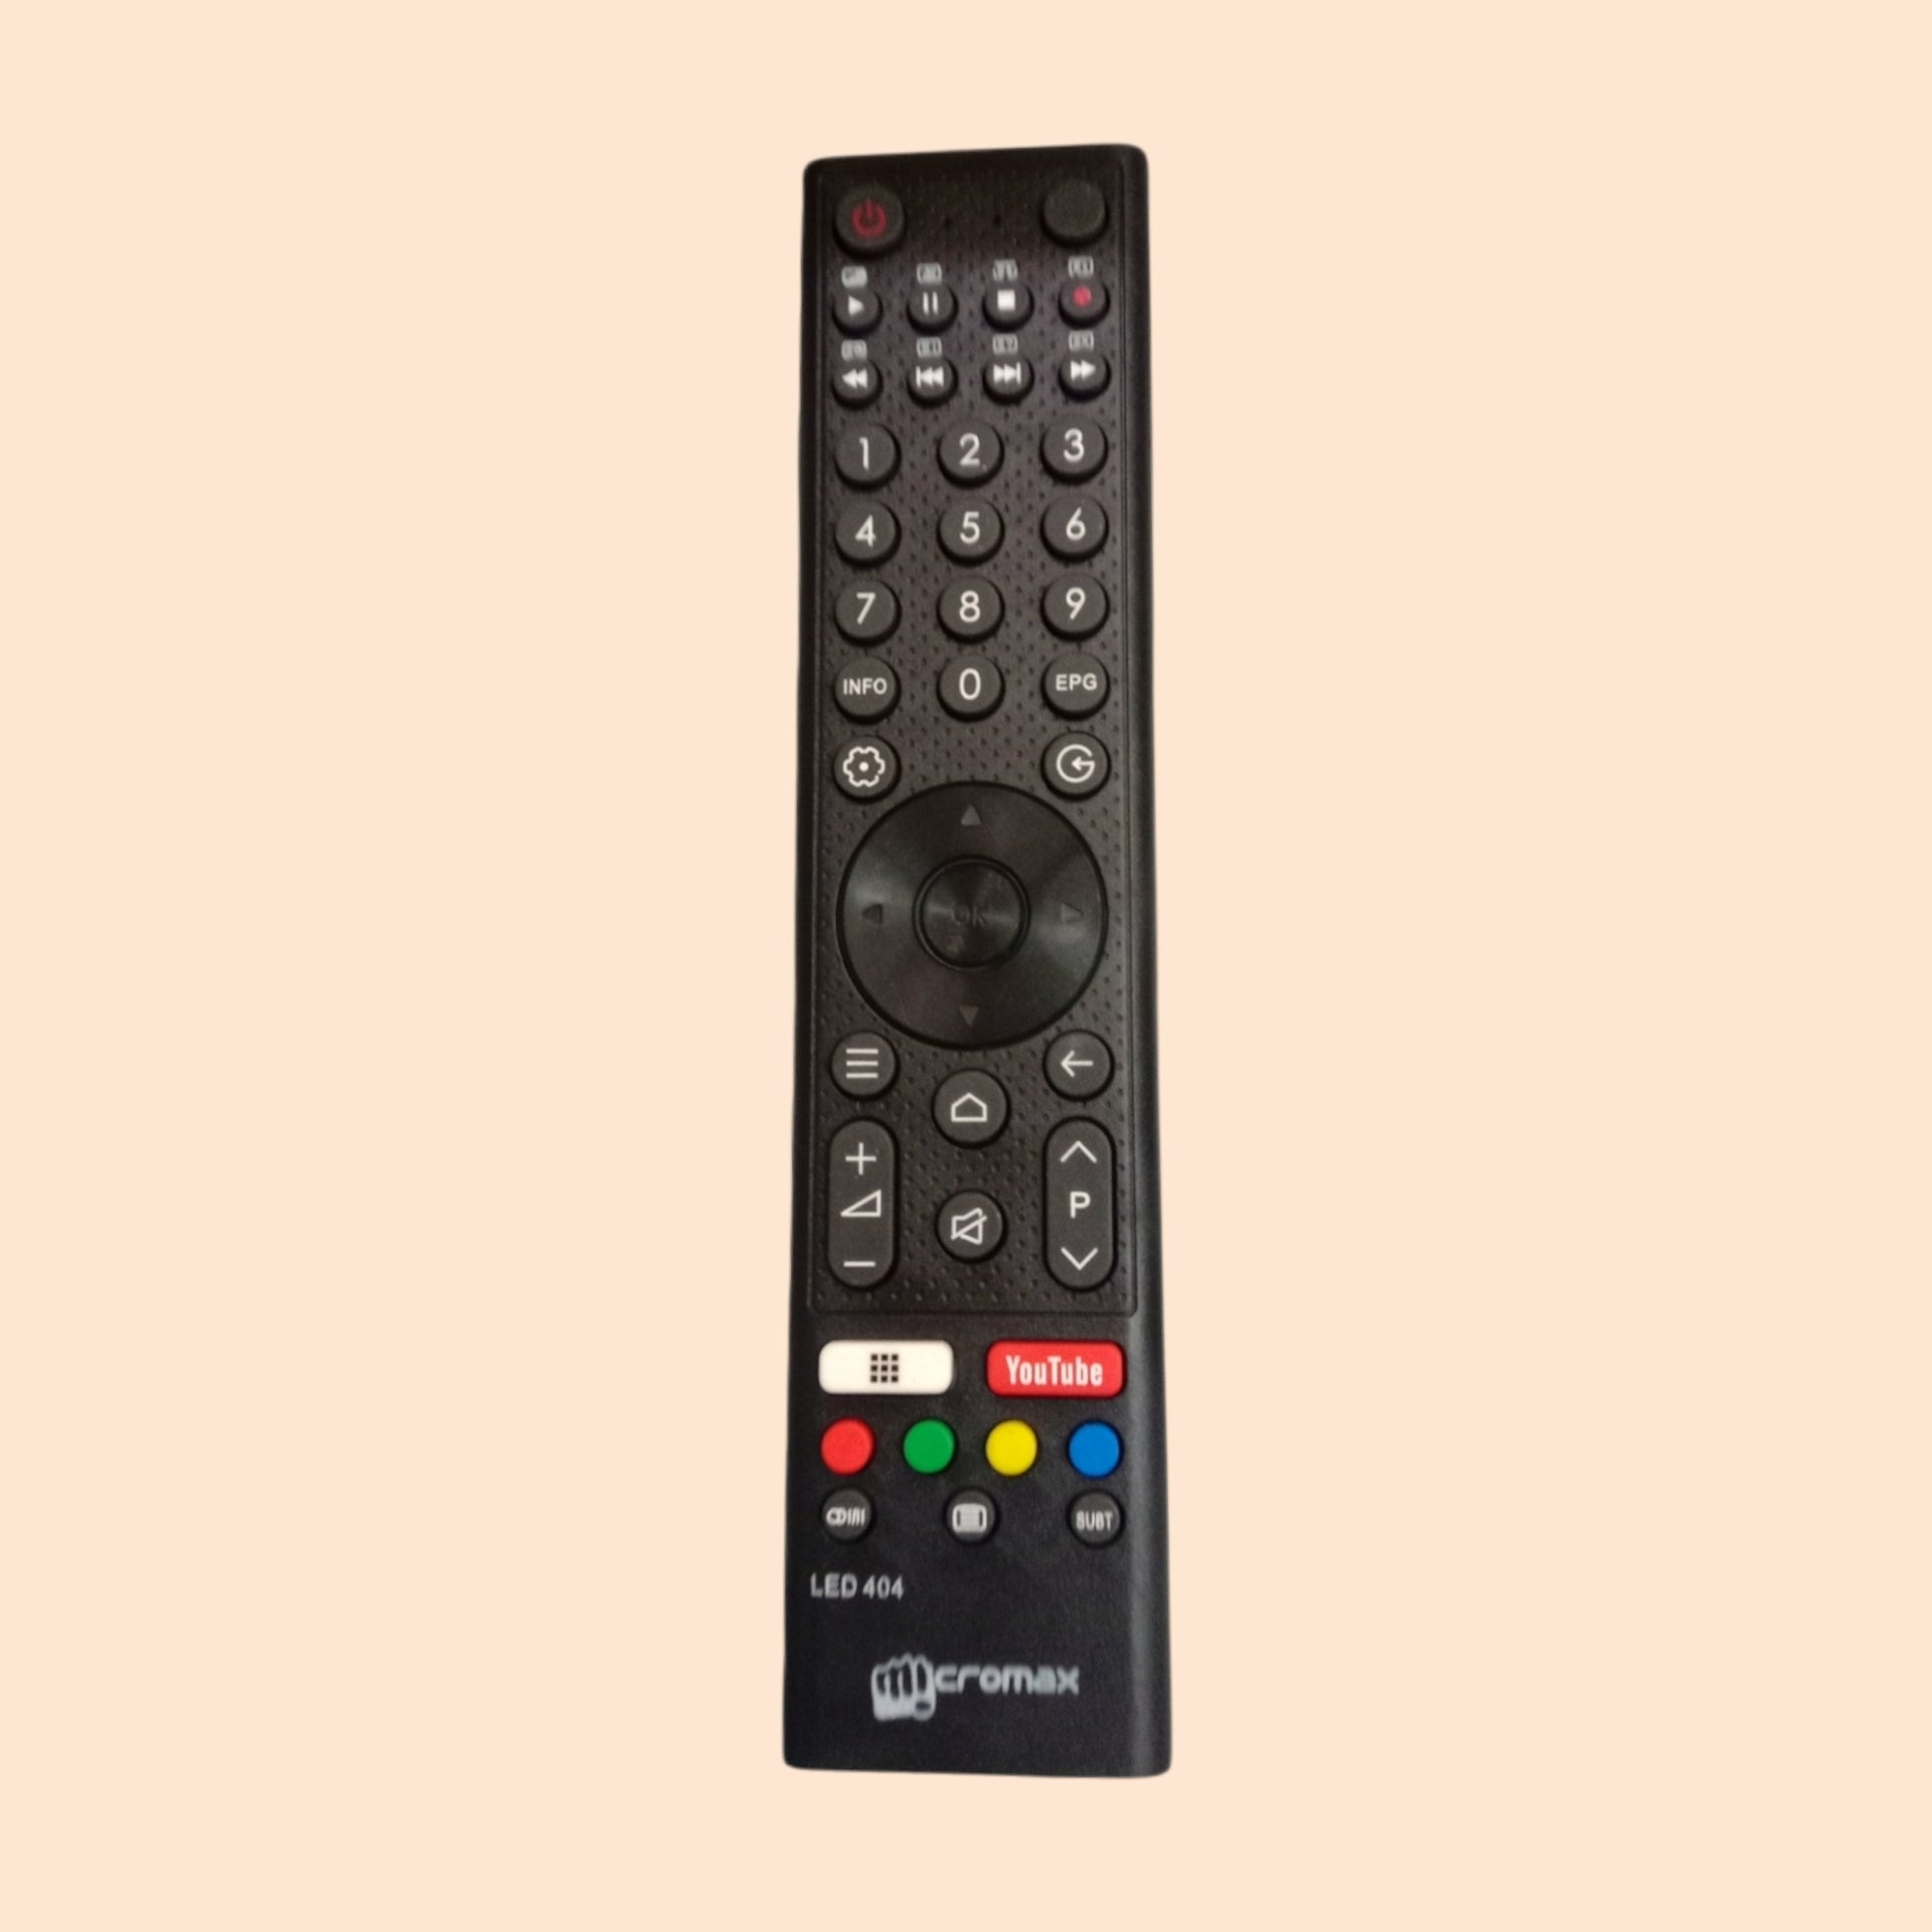 Micromax smart tv remote with youtube - Faritha